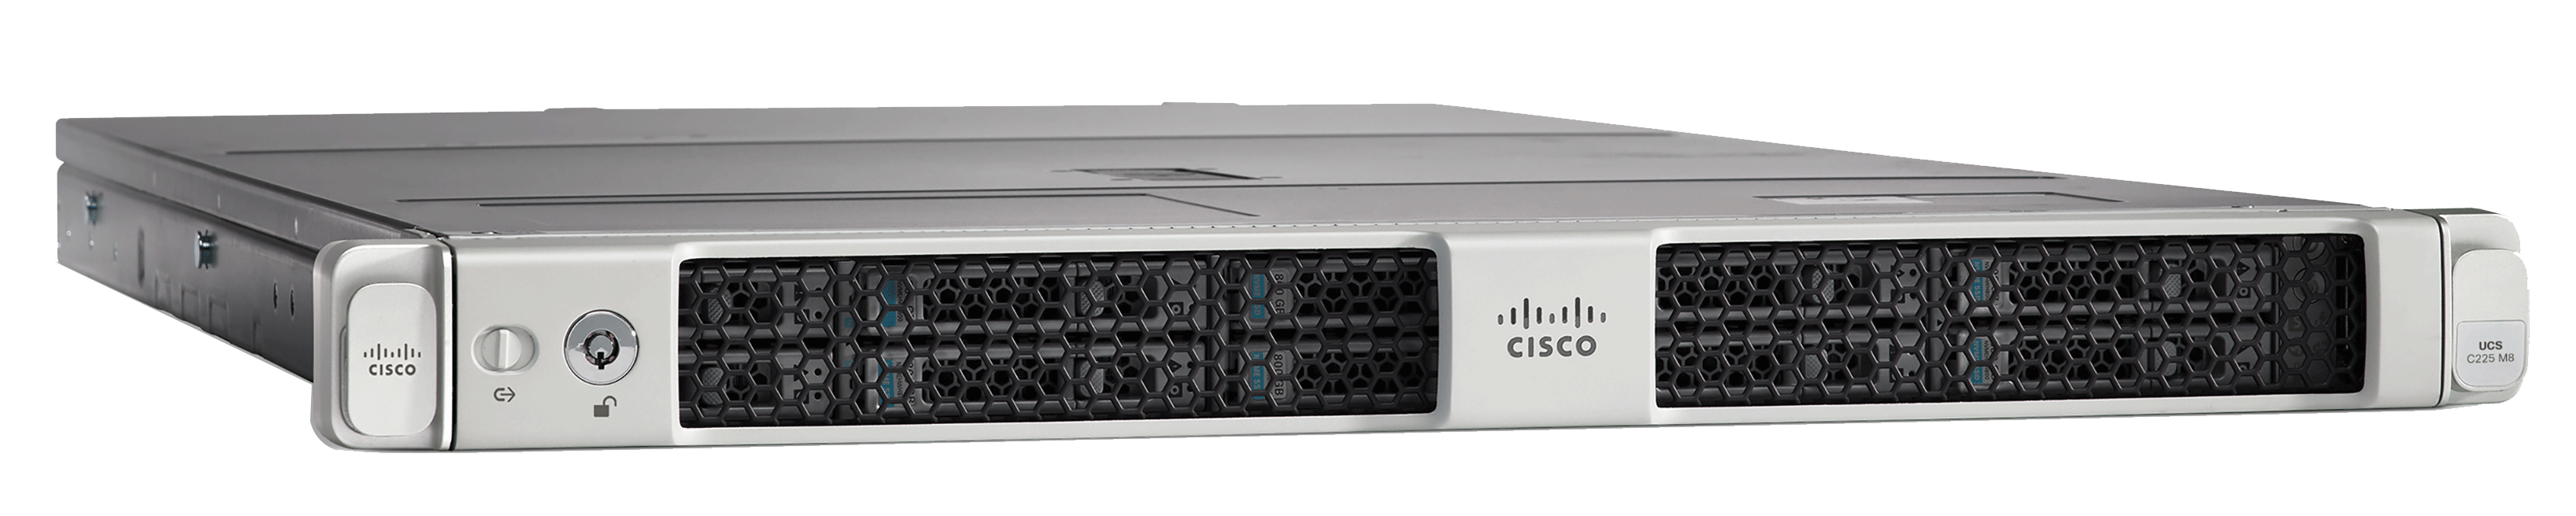 Cisco UCS® C225 M8 Rack Server